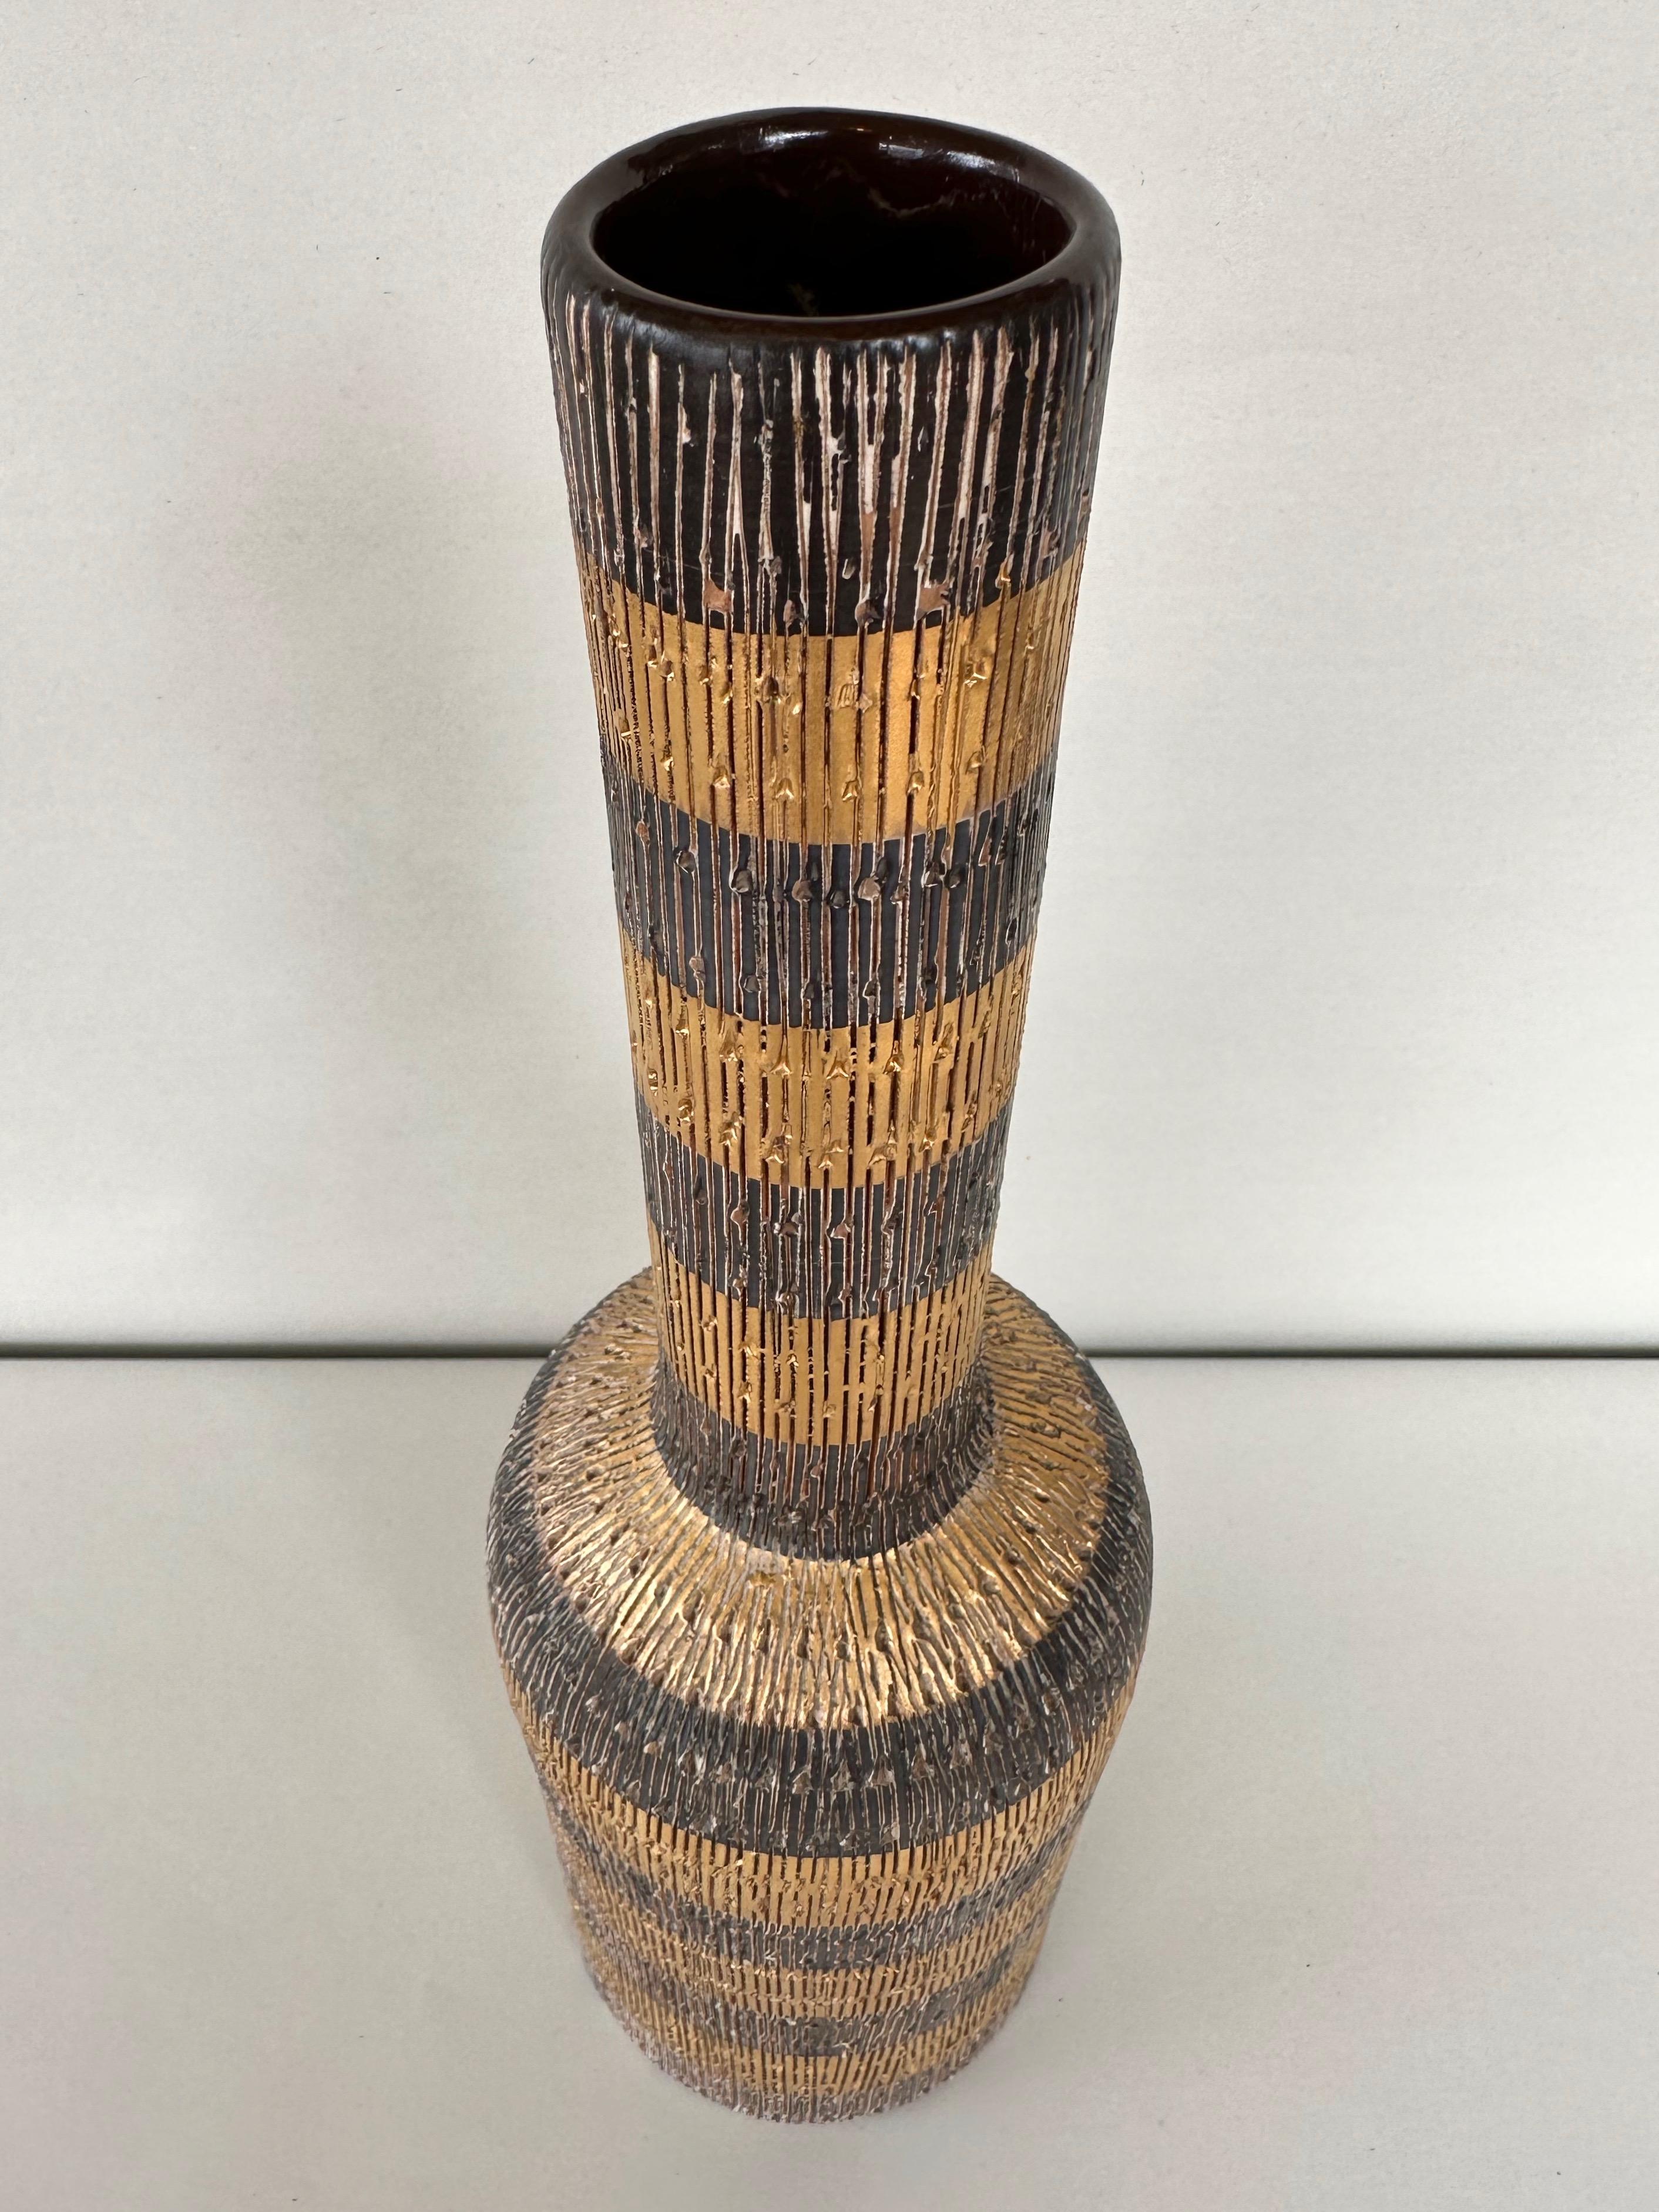 Aldo Londi for Bitossi via Raymor Seta Glazed Incised Pottery Bottle Vase, 1950s 1